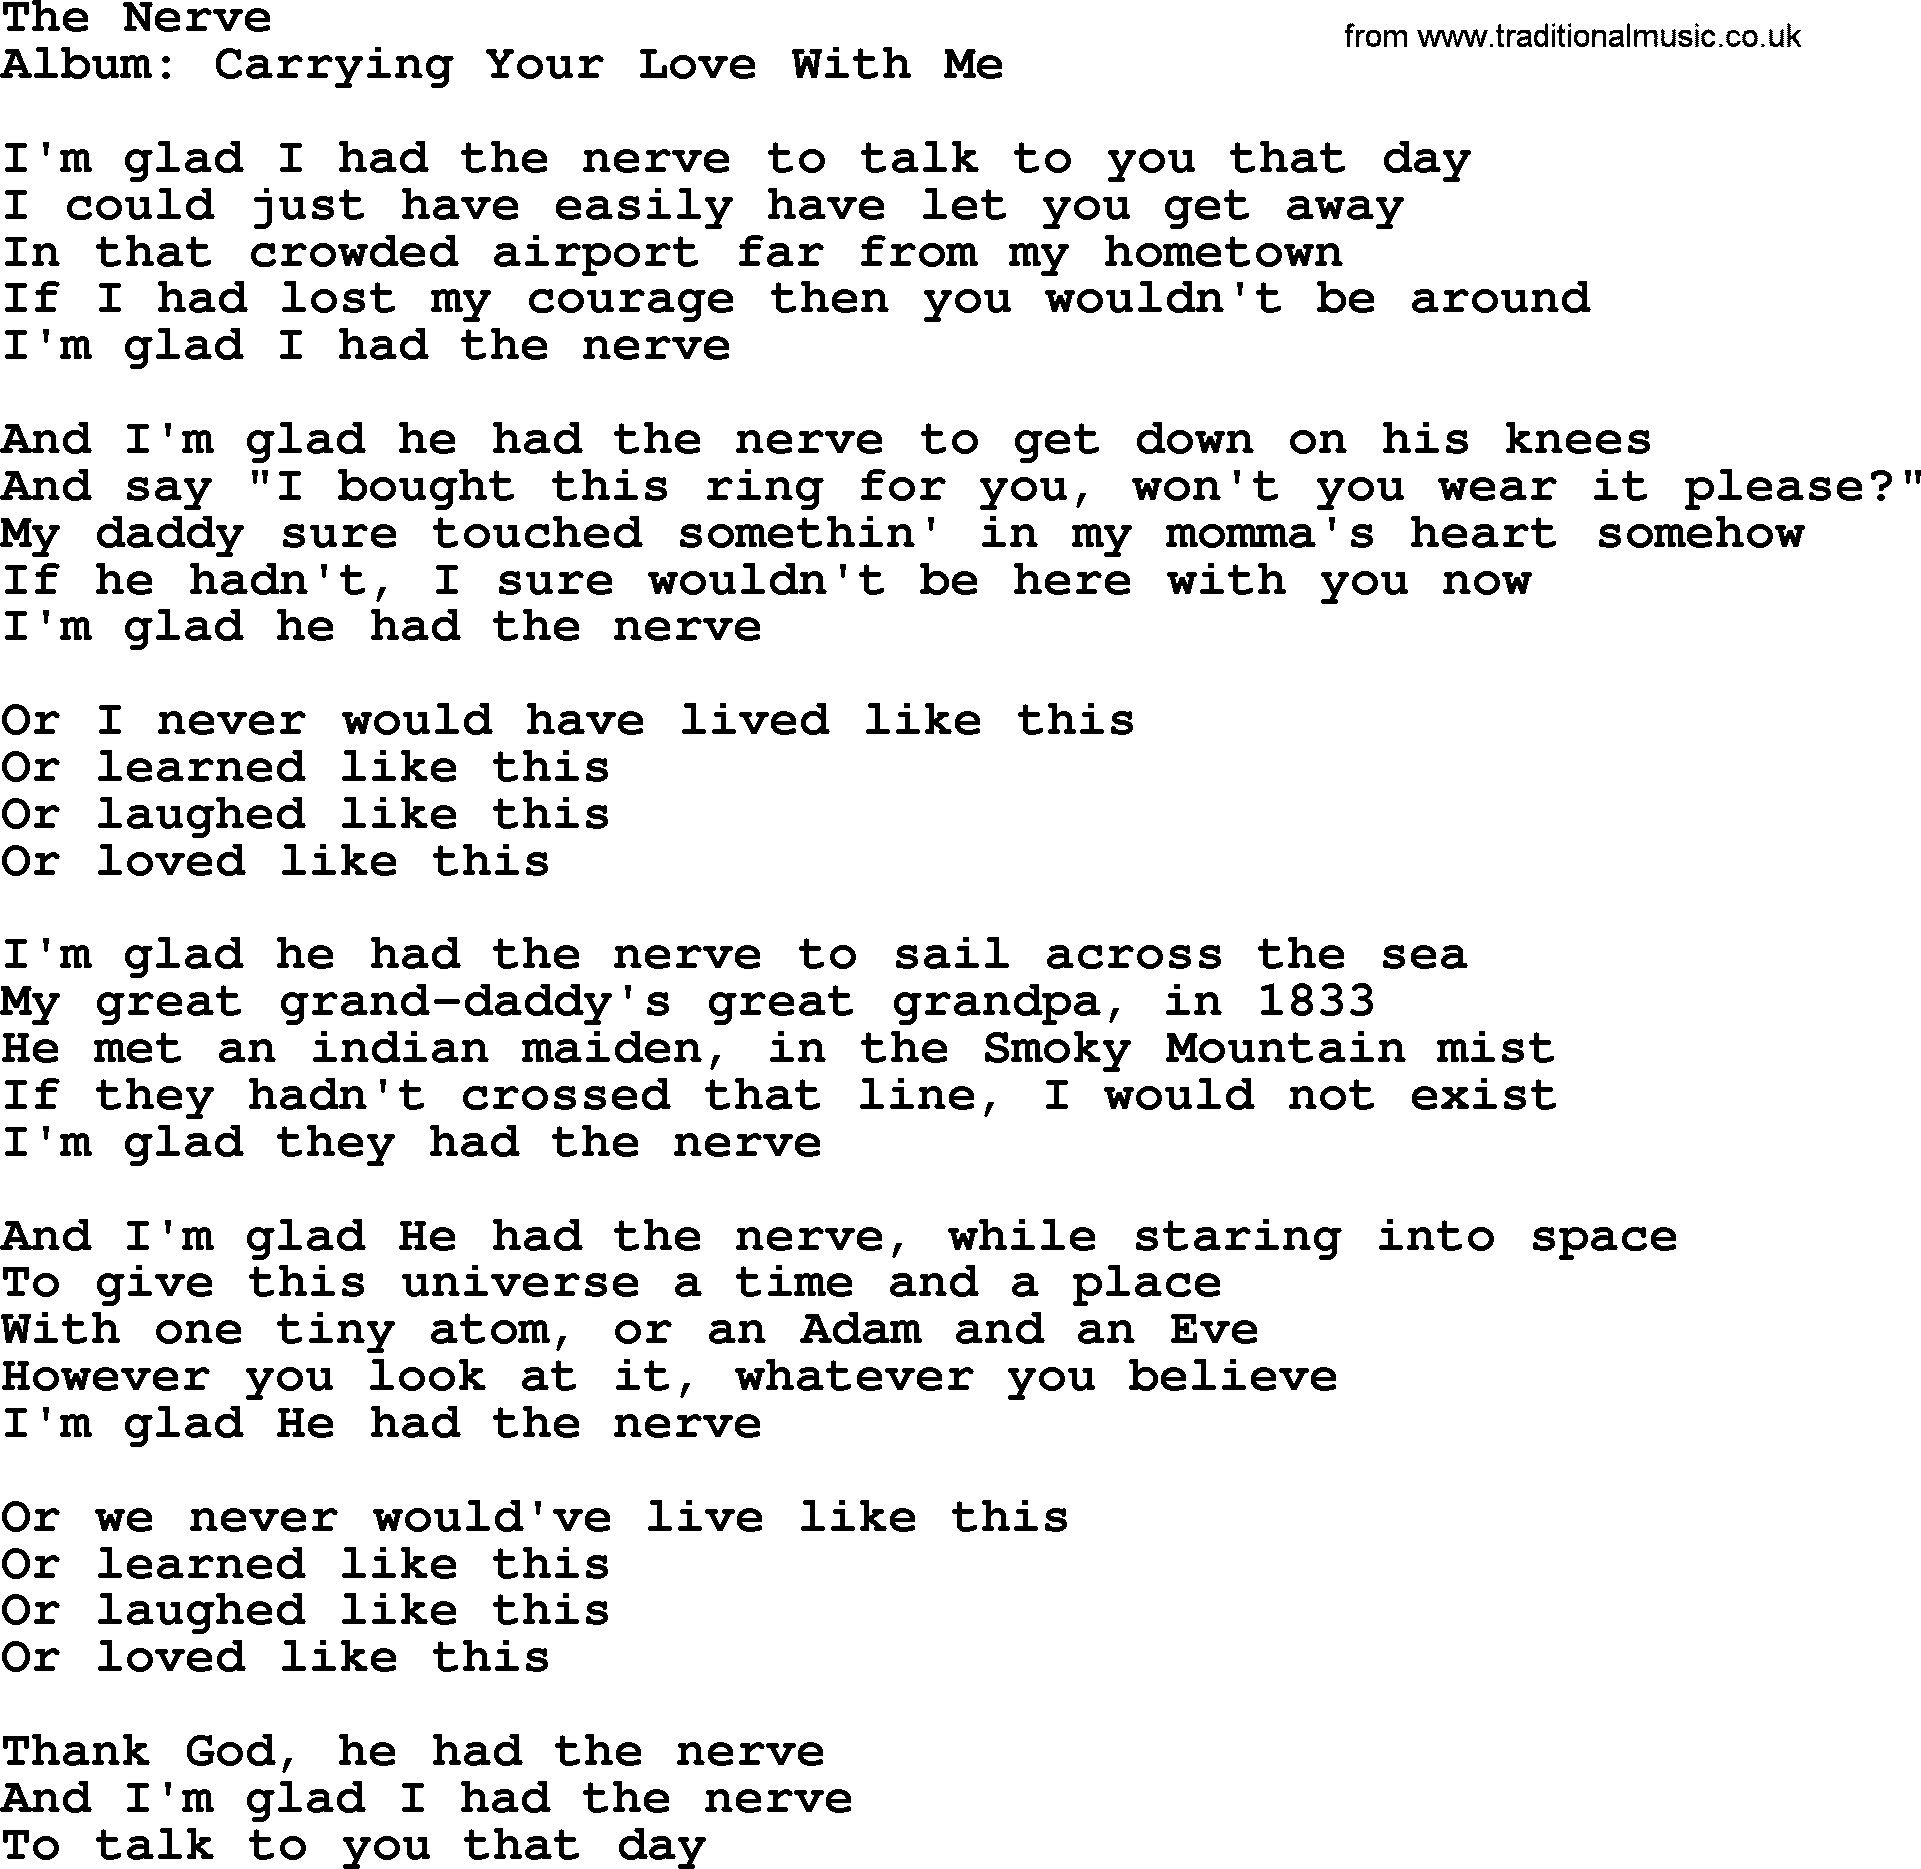 George Strait song: The Nerve, lyrics